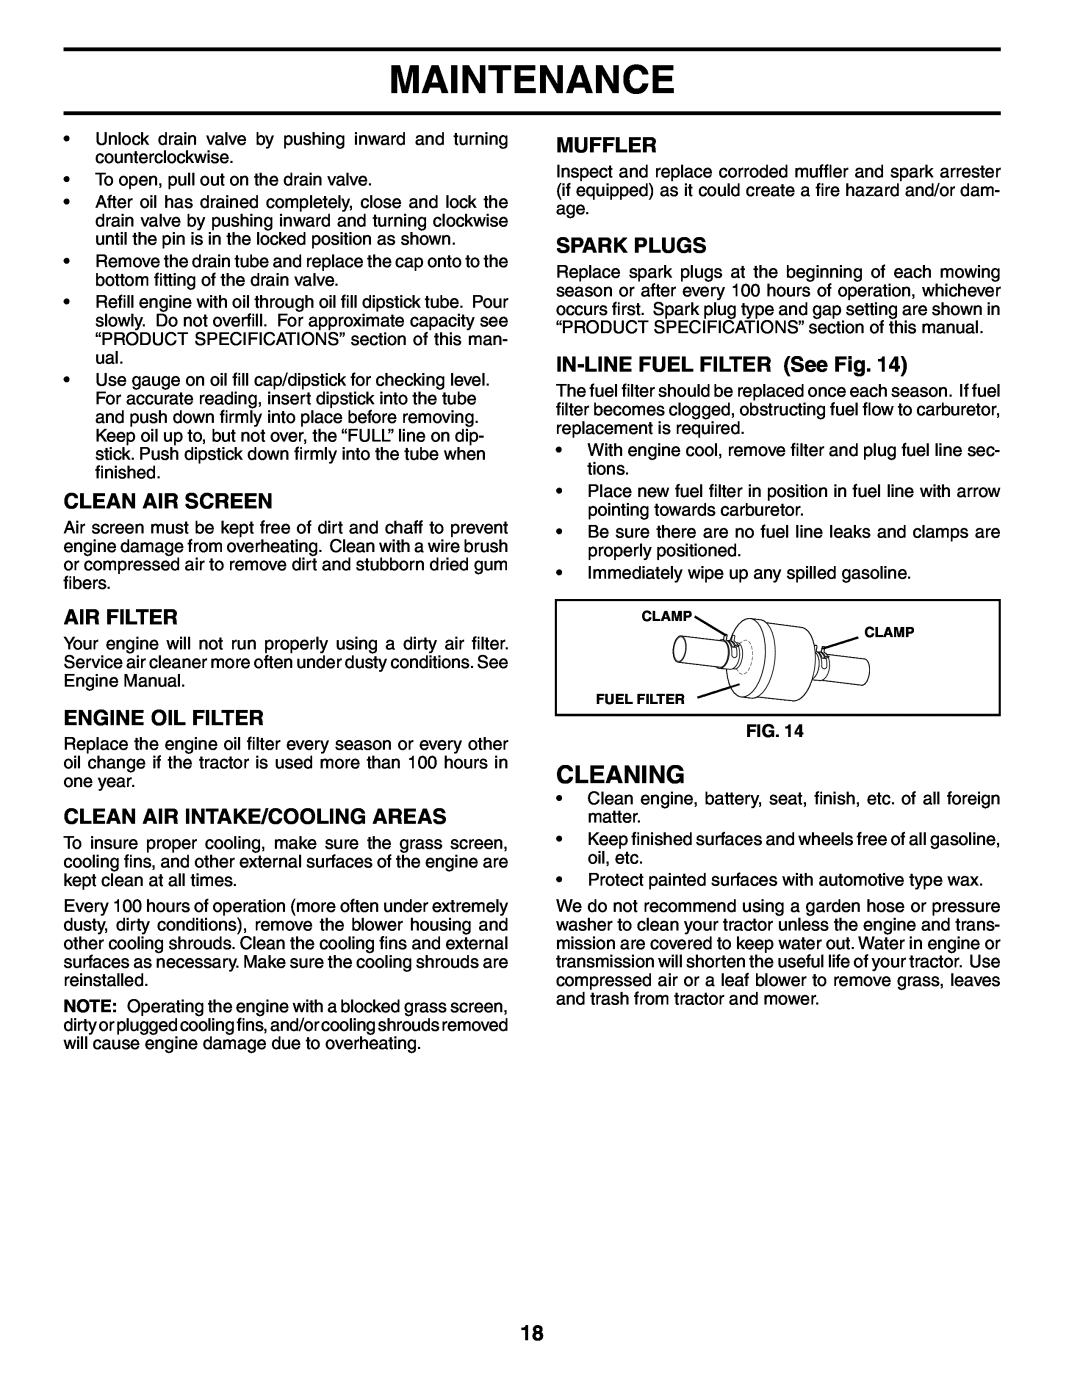 Ryobi 197788 manual Cleaning, Clean Air Screen, Air Filter, Engine Oil Filter, Clean Air Intake/Cooling Areas, Muffler 